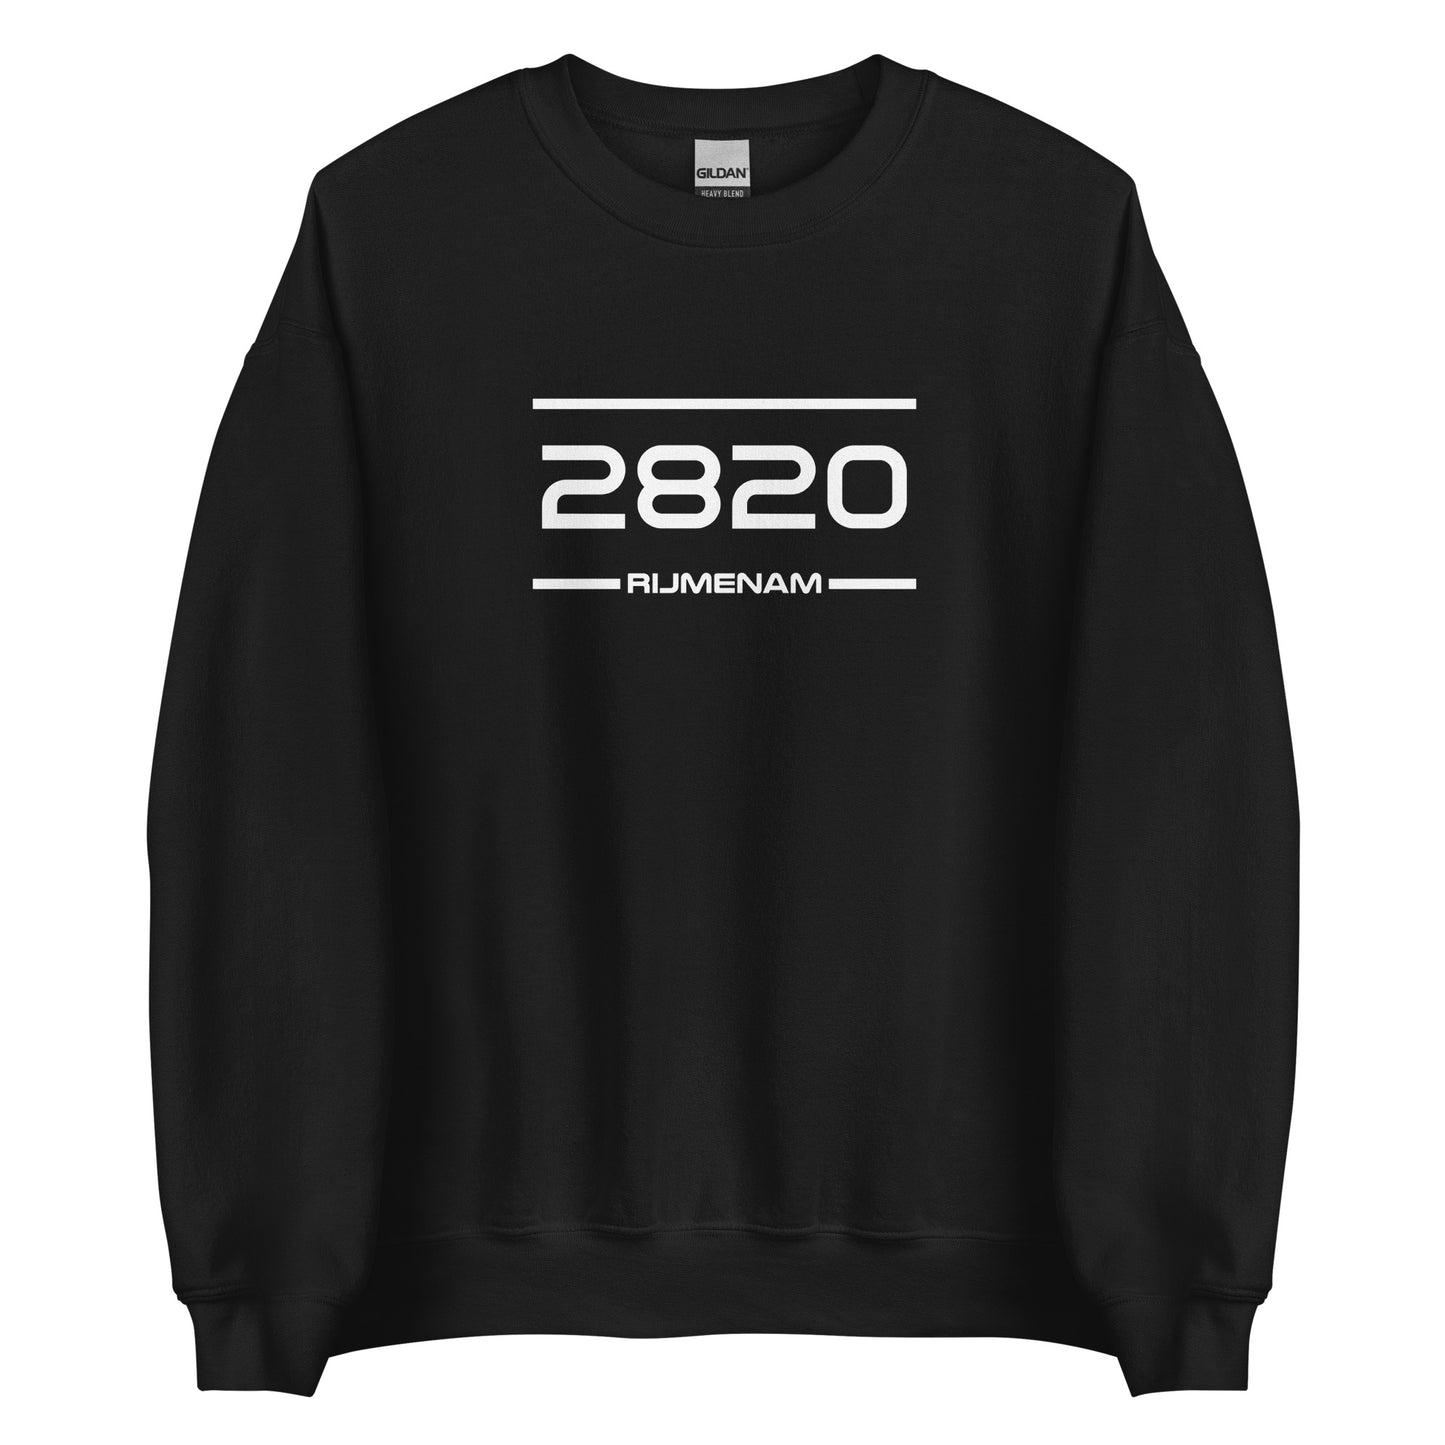 Sweater - 2820 - Rijmenam (M/V)